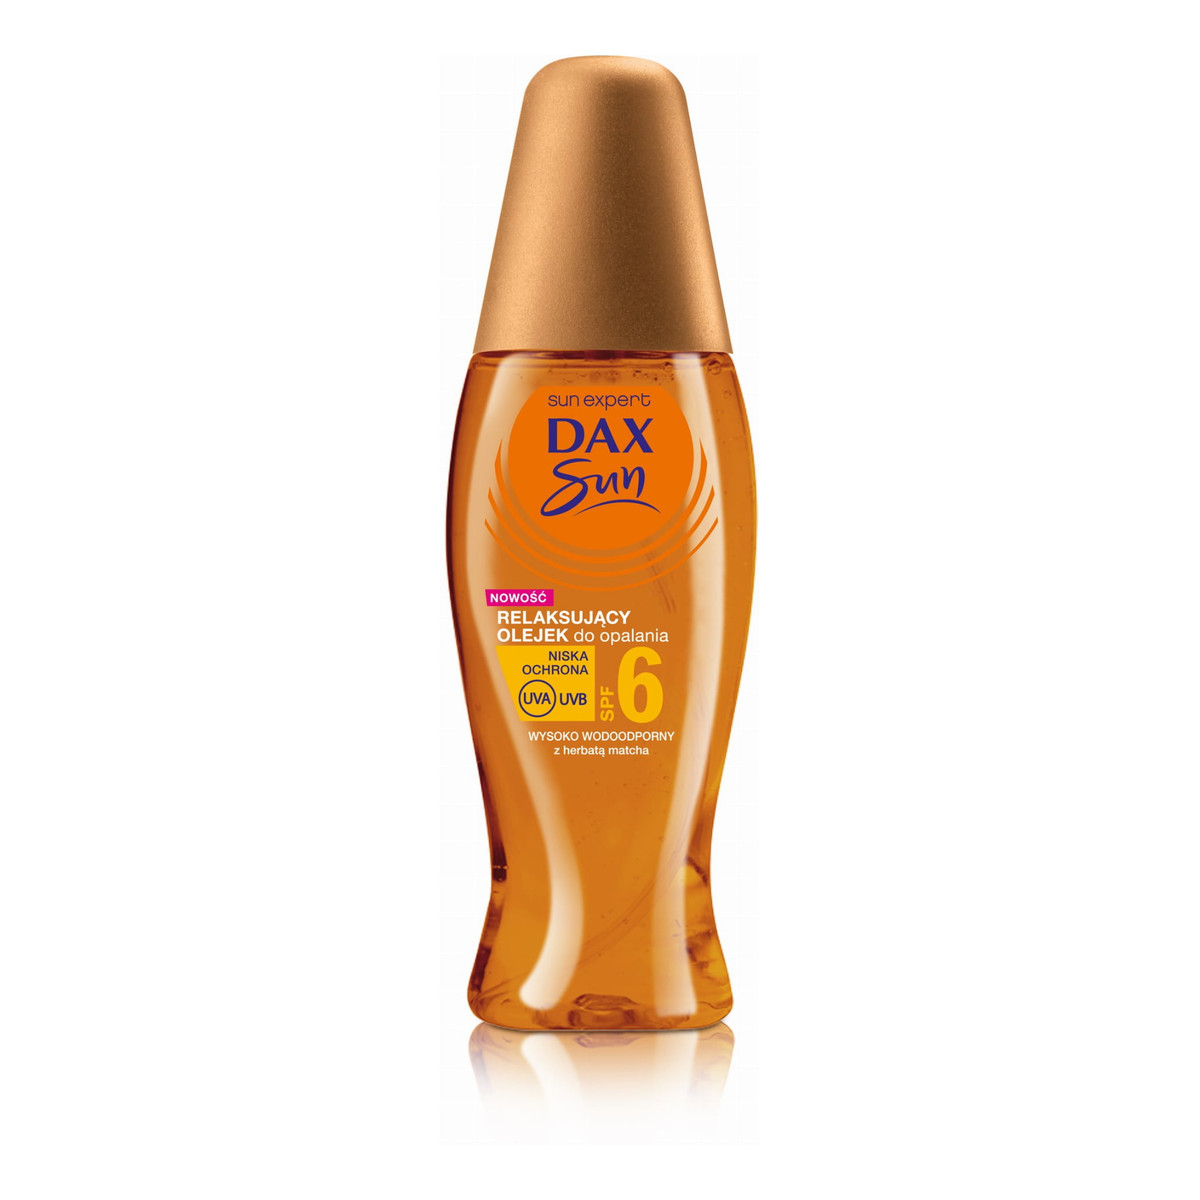 Dax Sun SPF6 relaksujący olejek do opalania 150ml